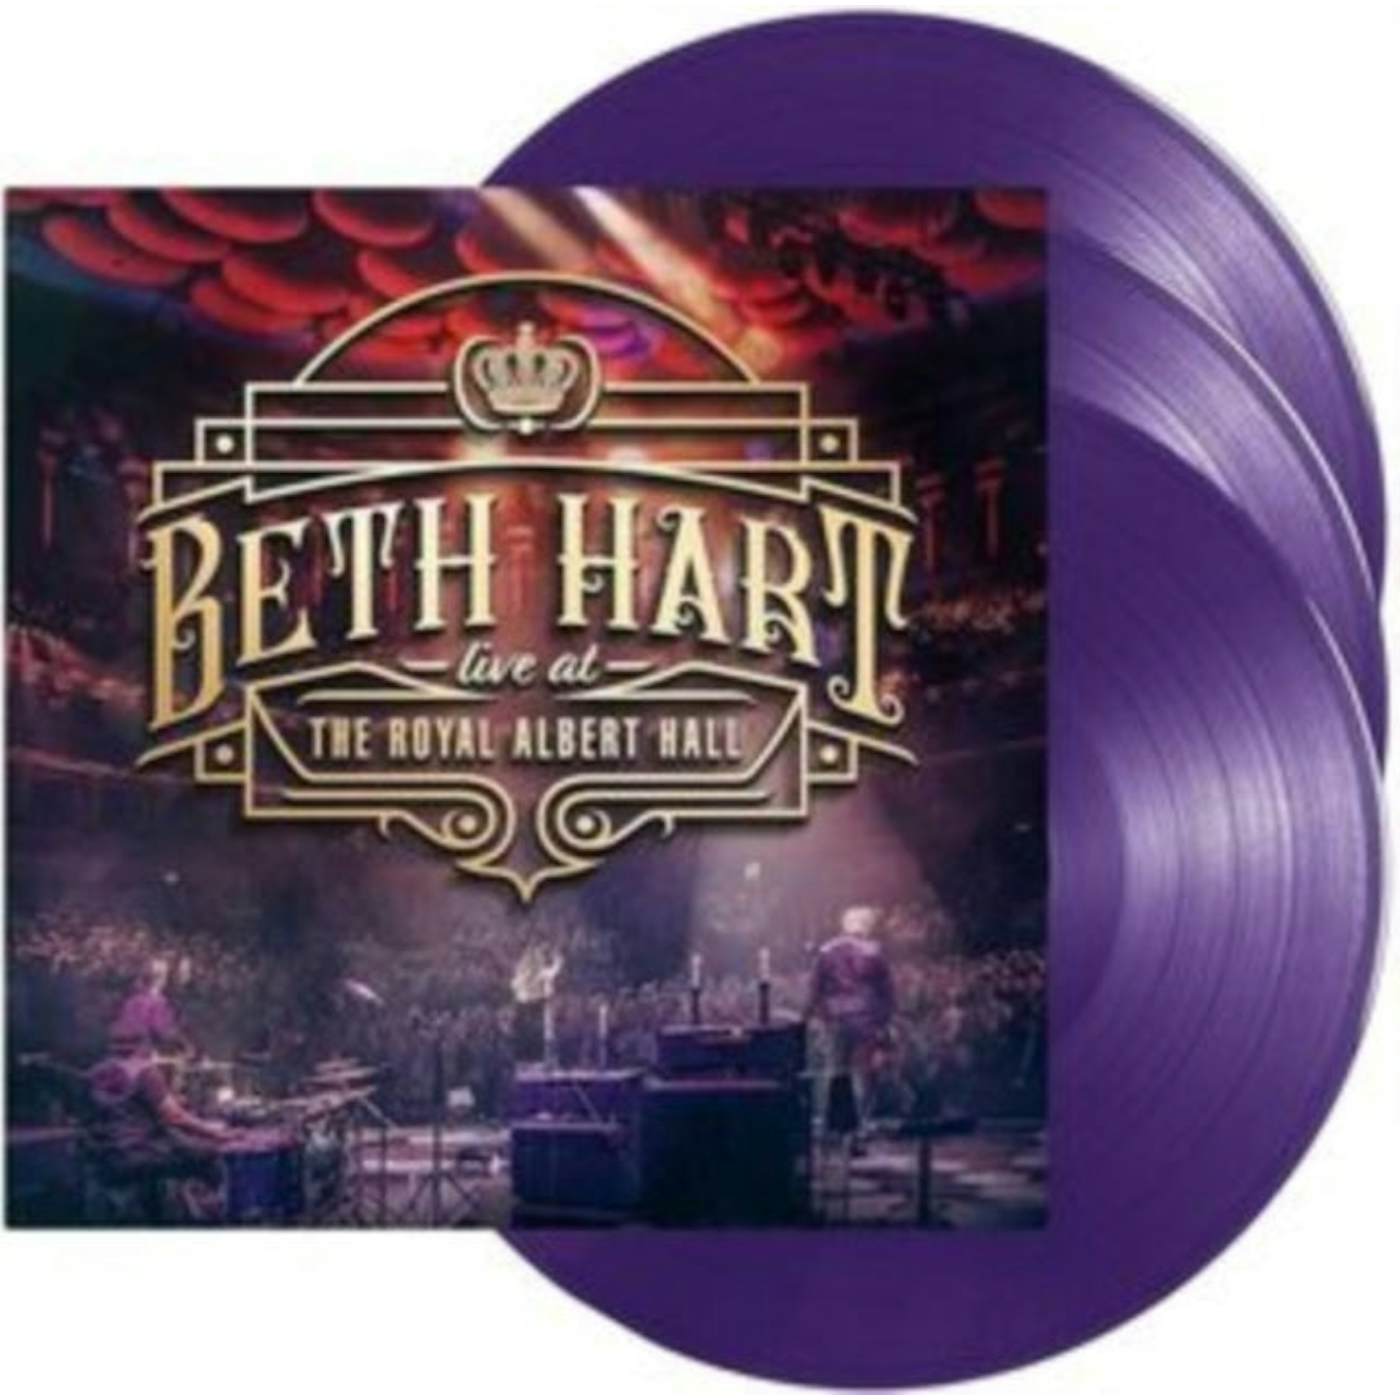 Beth Hart LP - Live At The Royal Albert Hall (Vinyl)